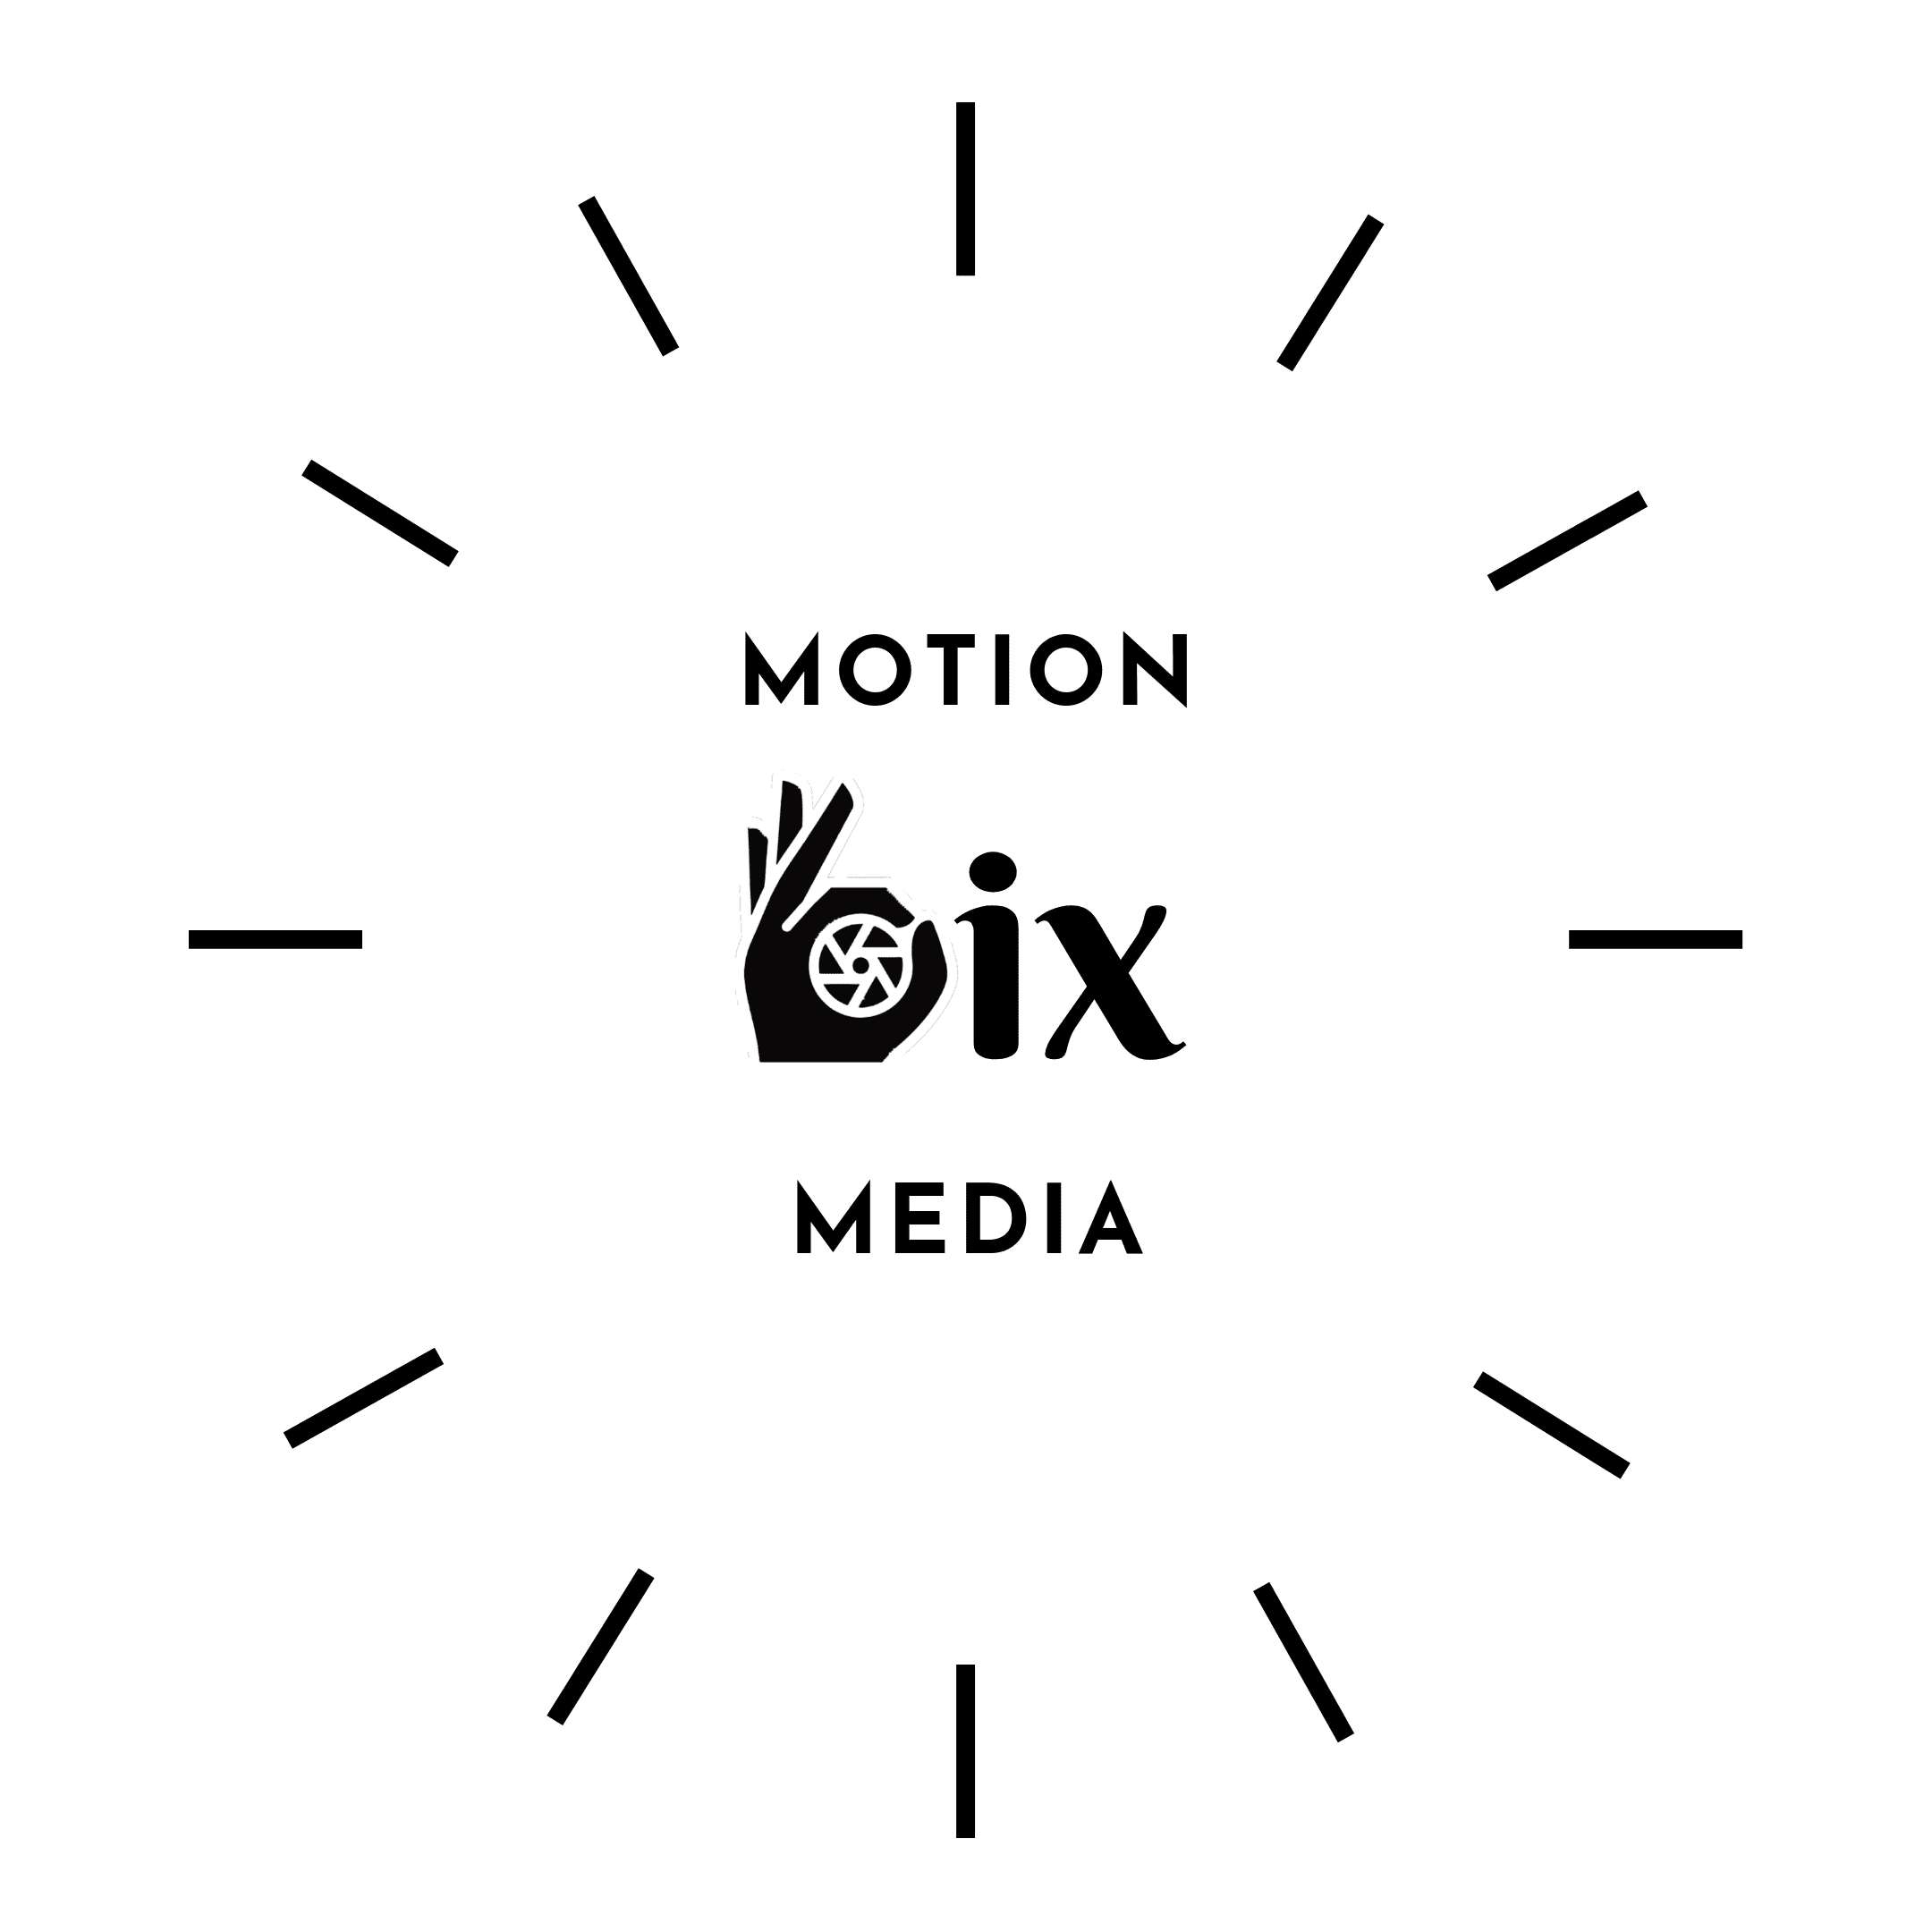 Motion 6Ix Media